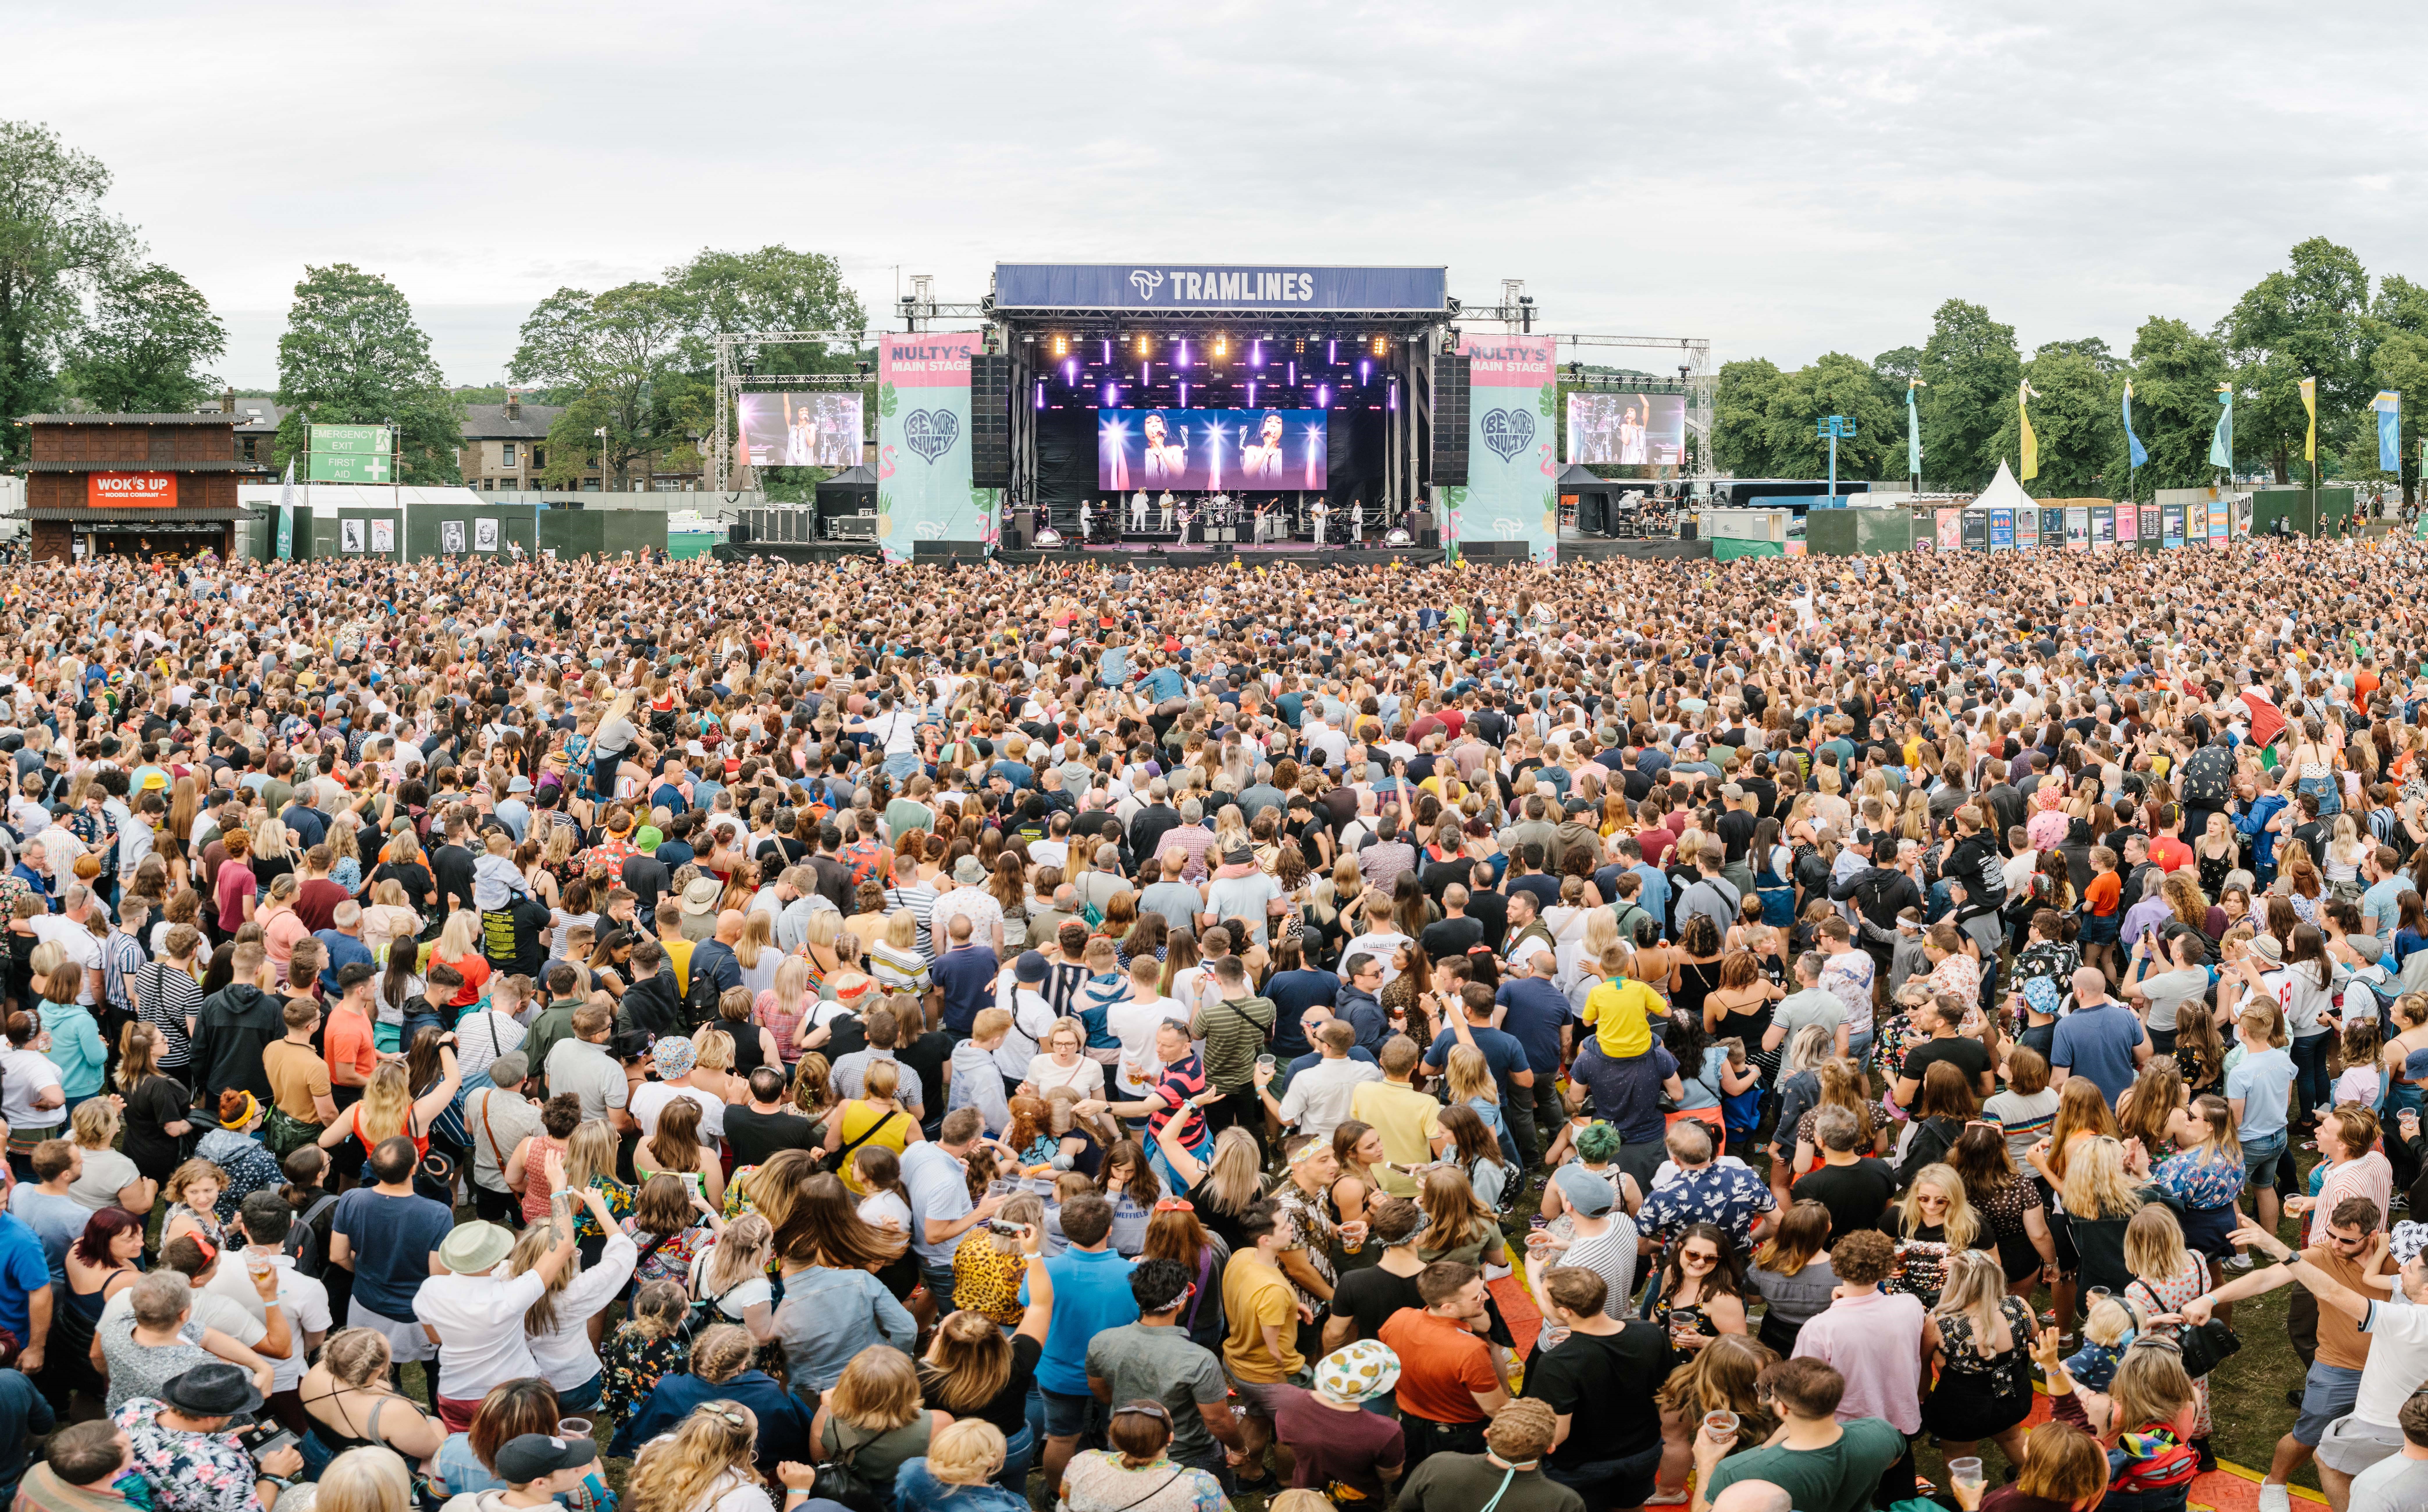 Festival goers at Tramlines 2019